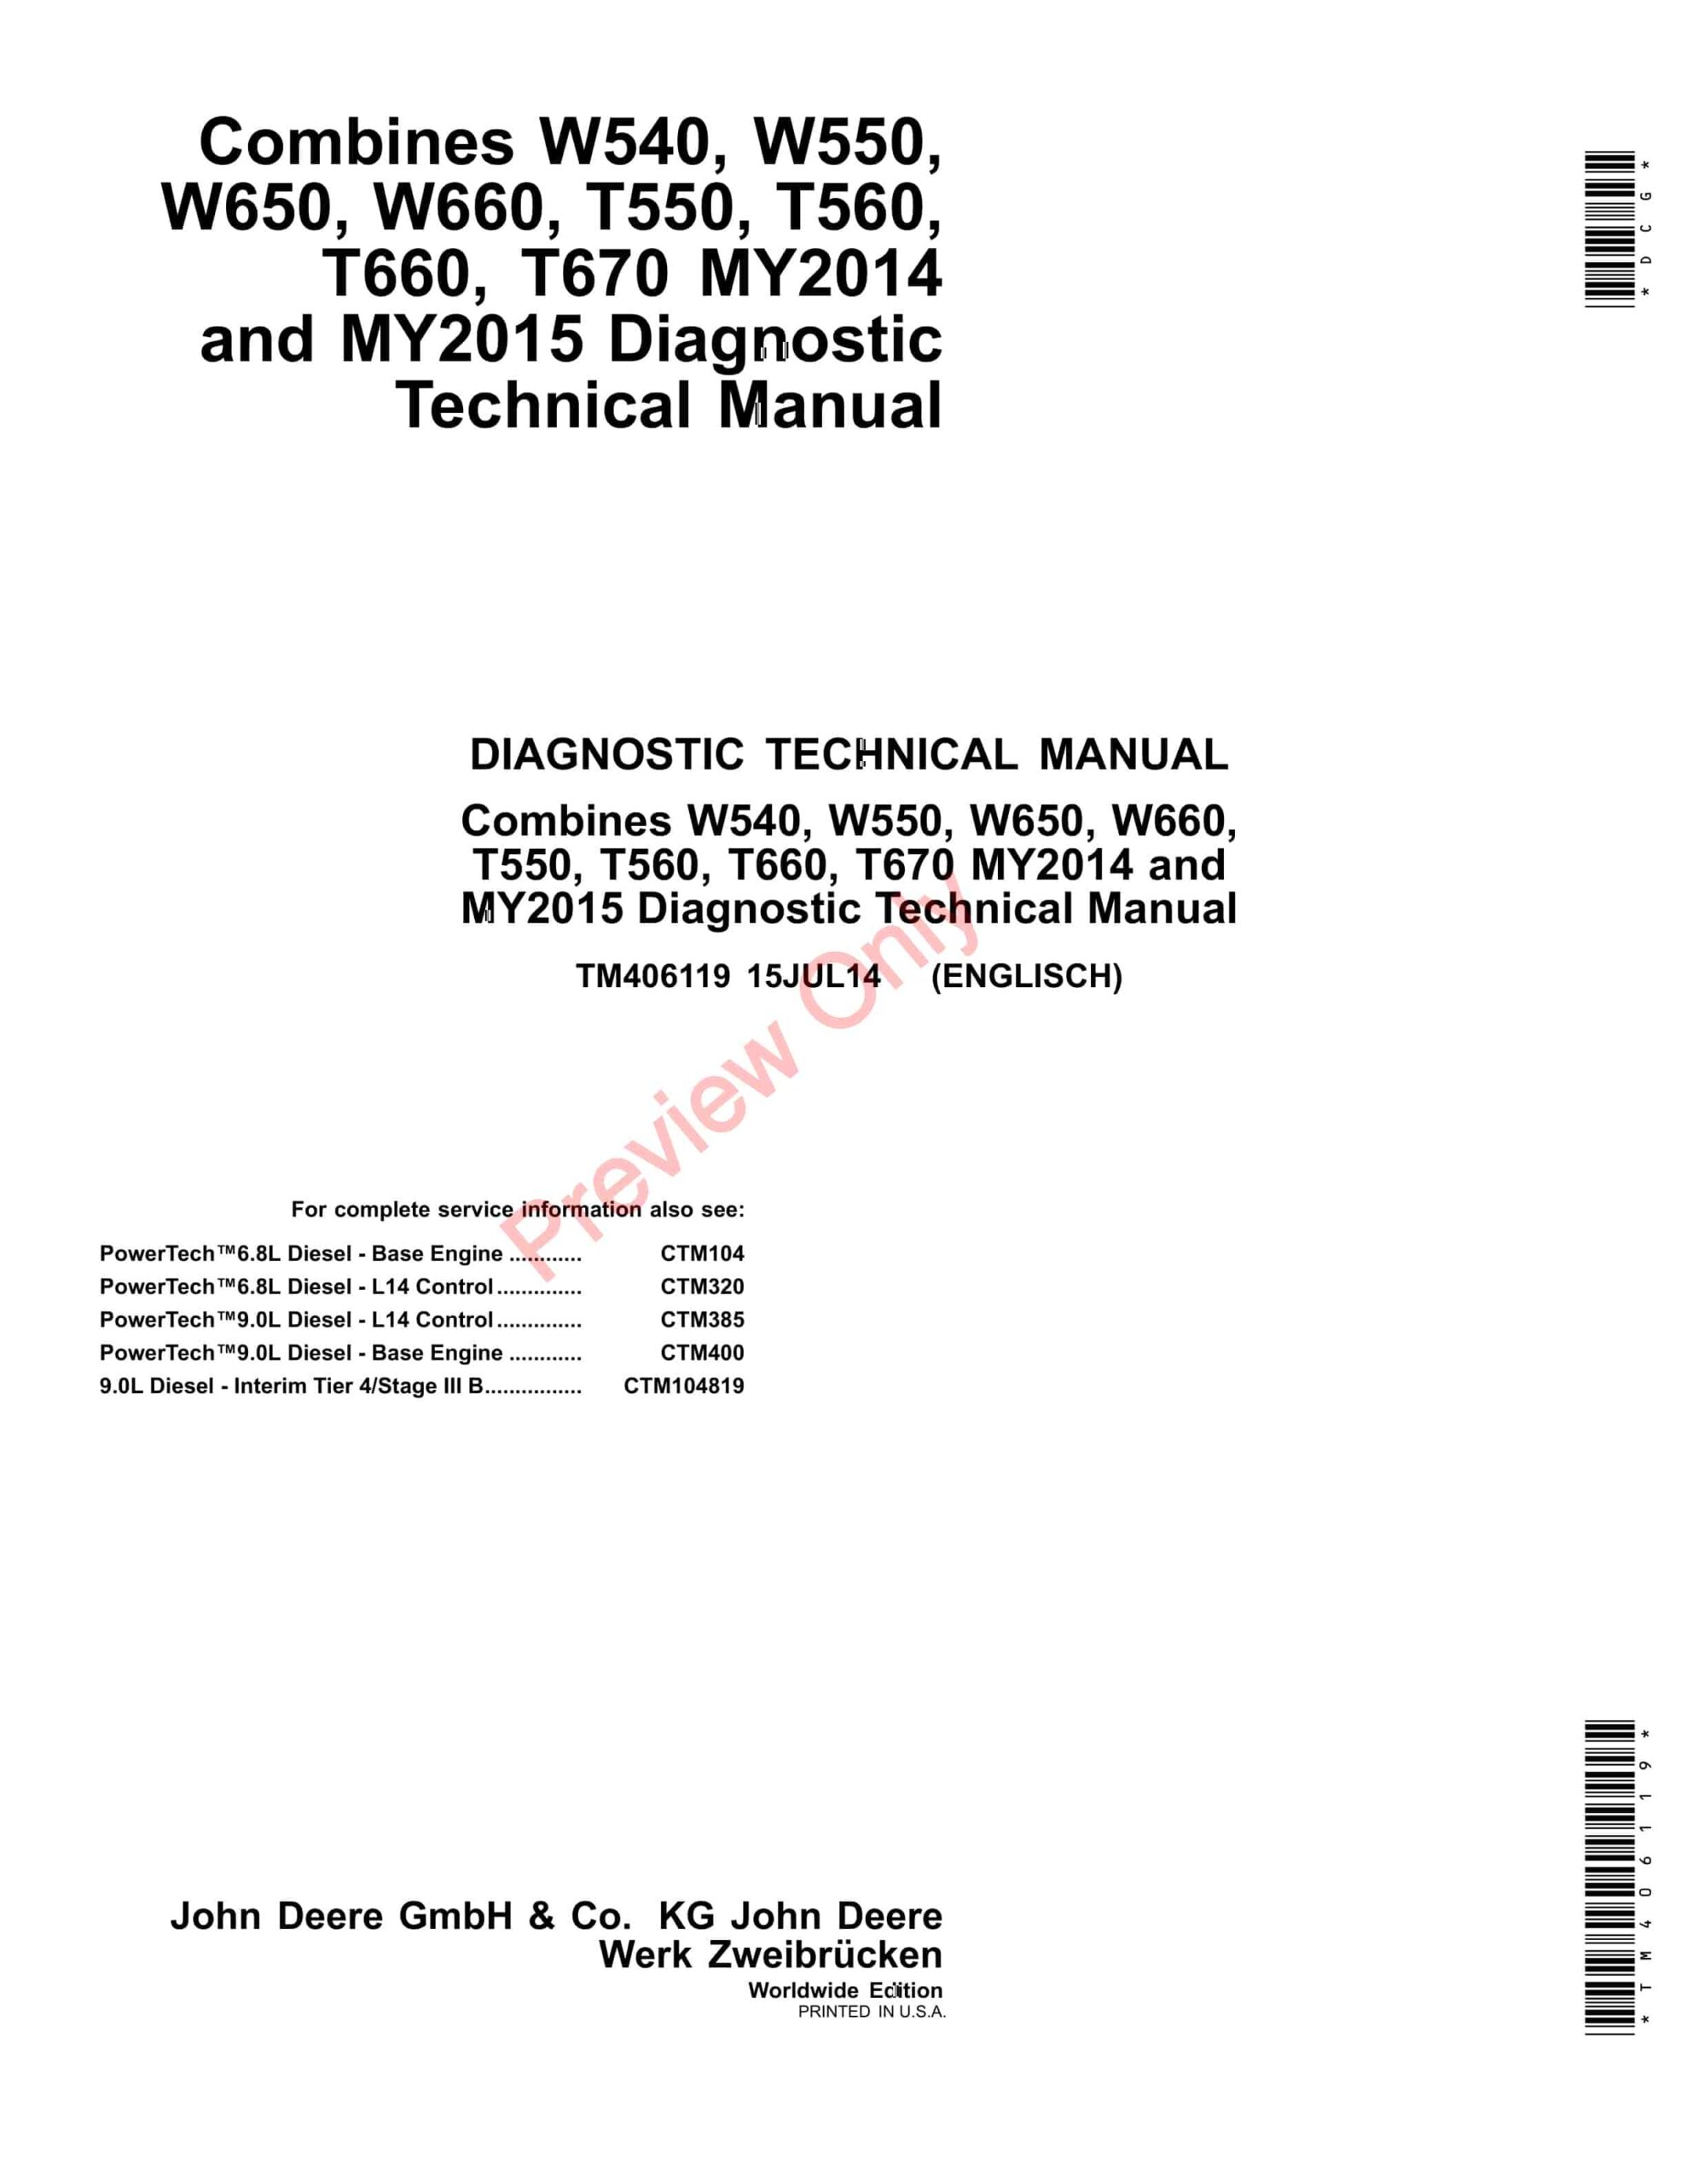 John Deere W540, W550, W650, W660, T550, T560, T660 and T670 Combines Diagnostic Technical Manual TM406119 15JUL14-1